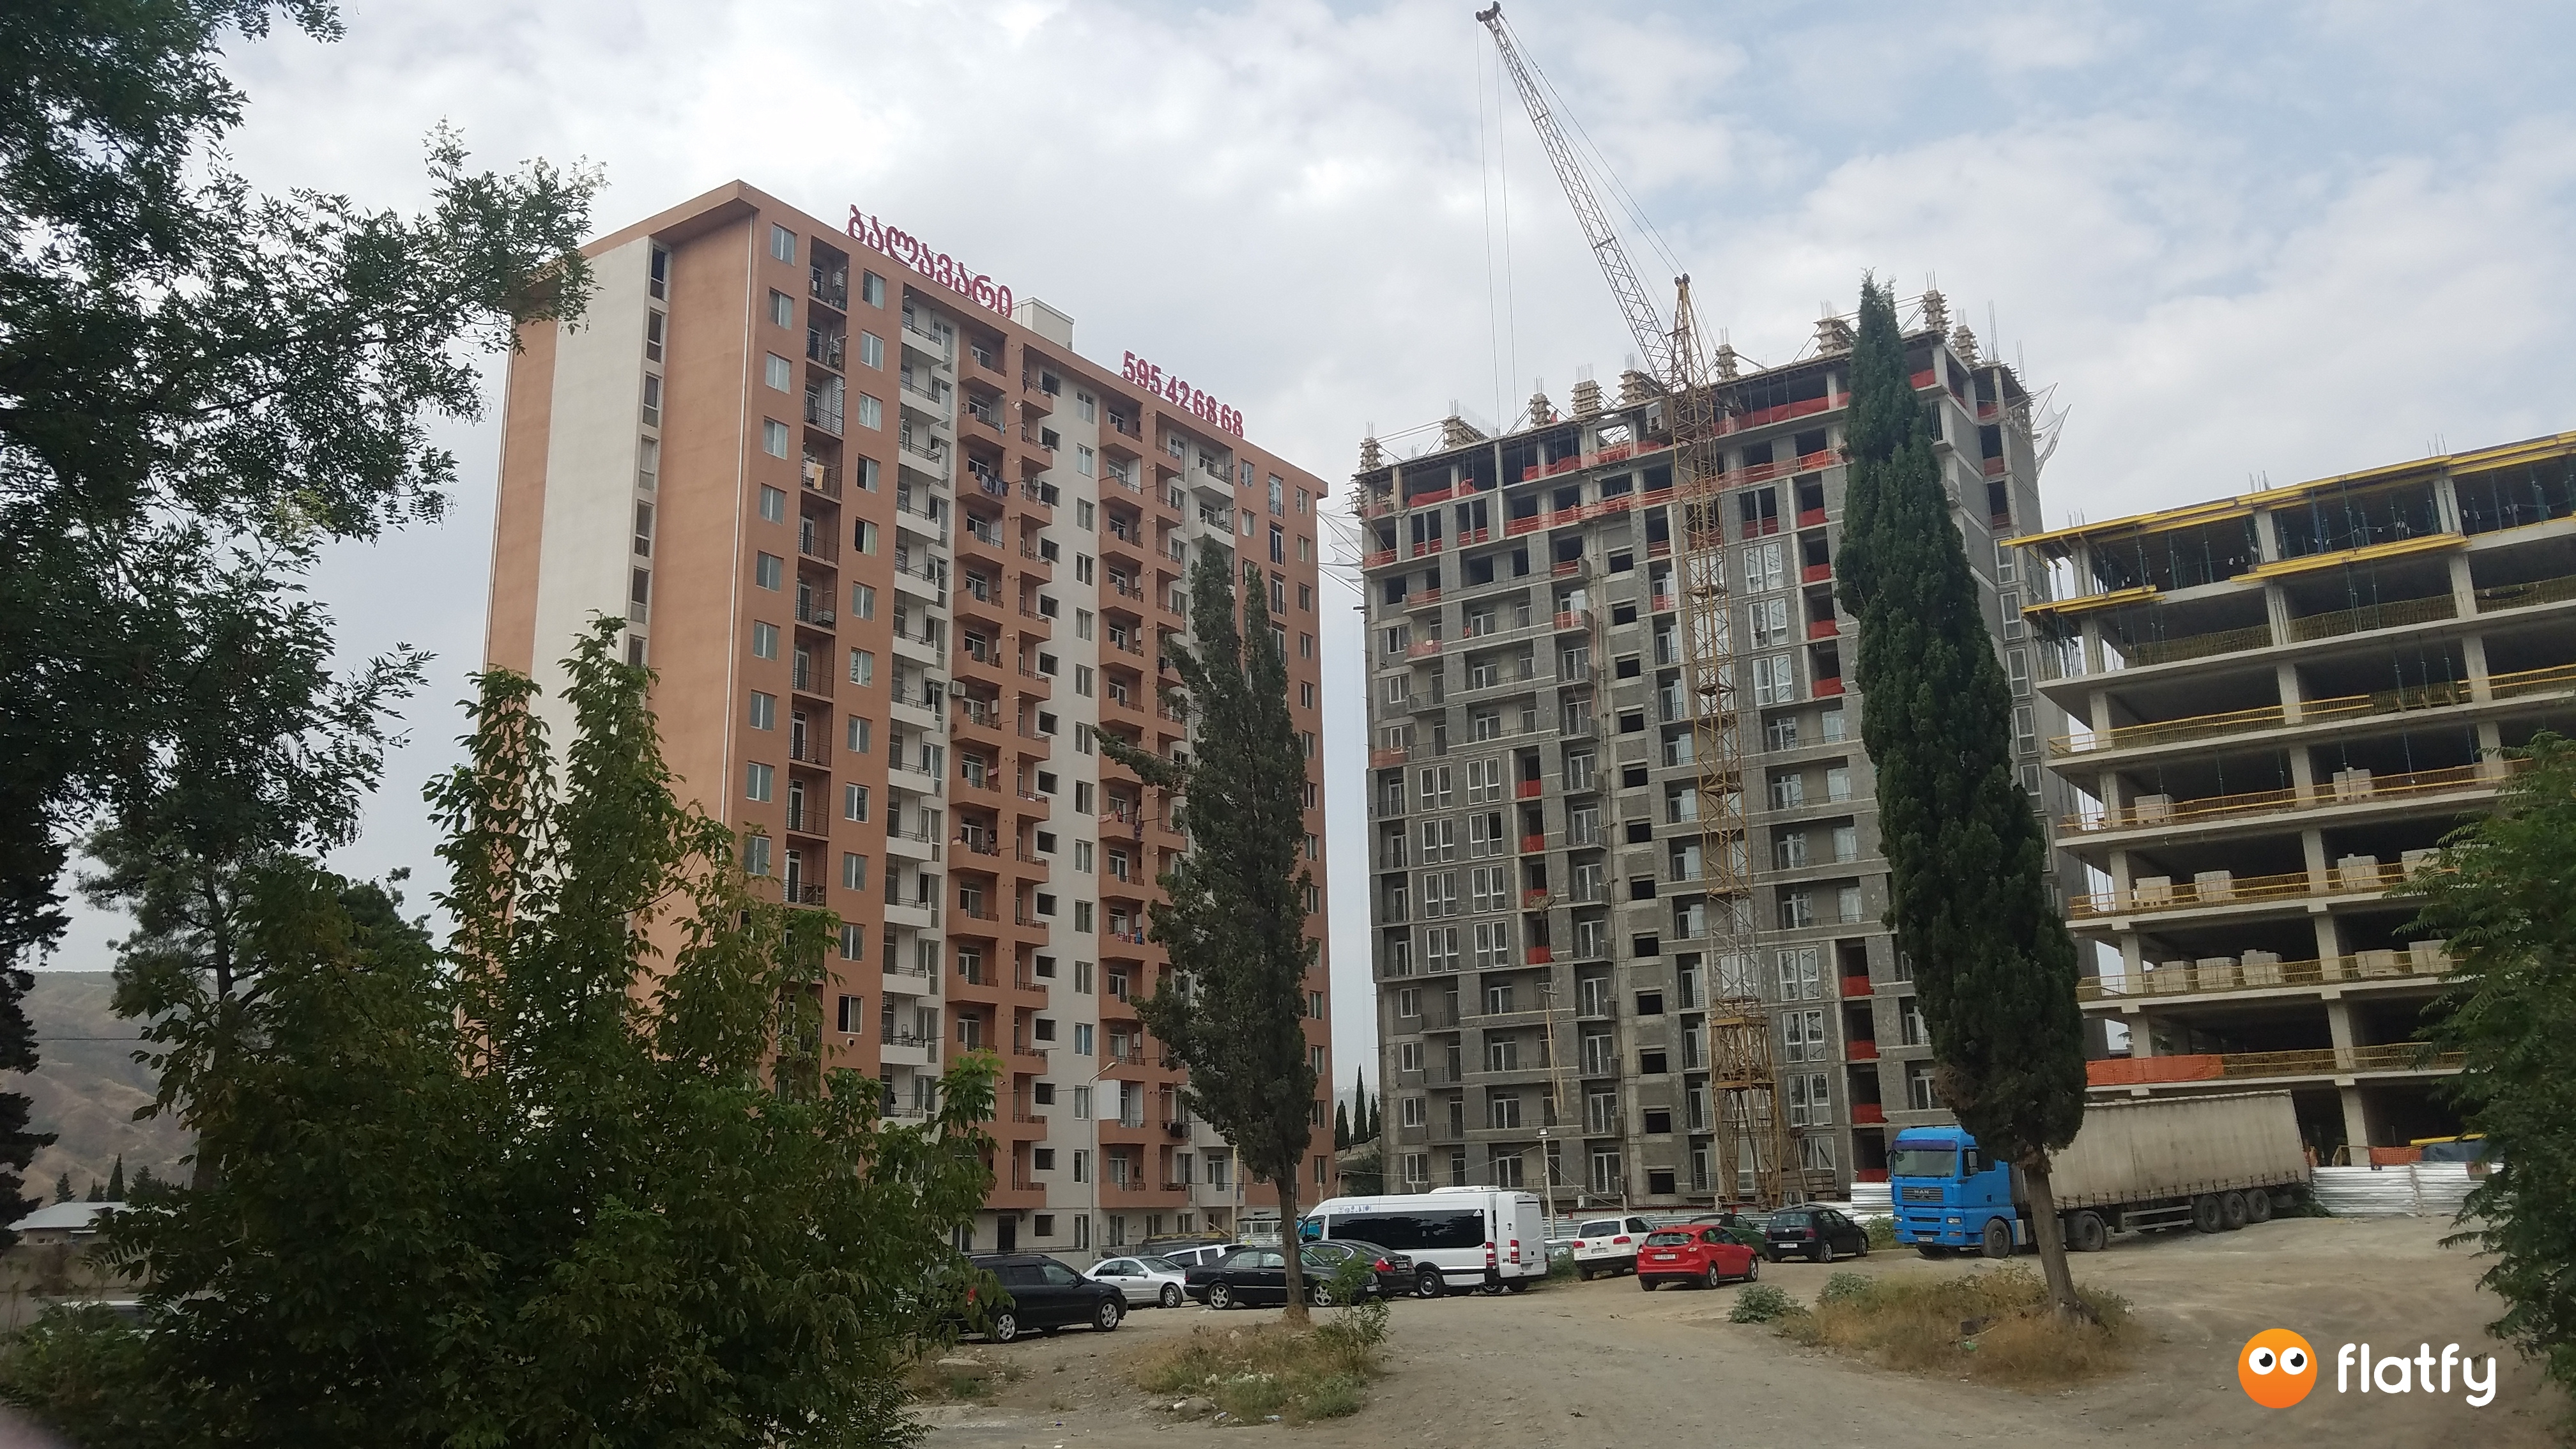 Construction progress Balavari Navtlugi - Angle 3, August 2019